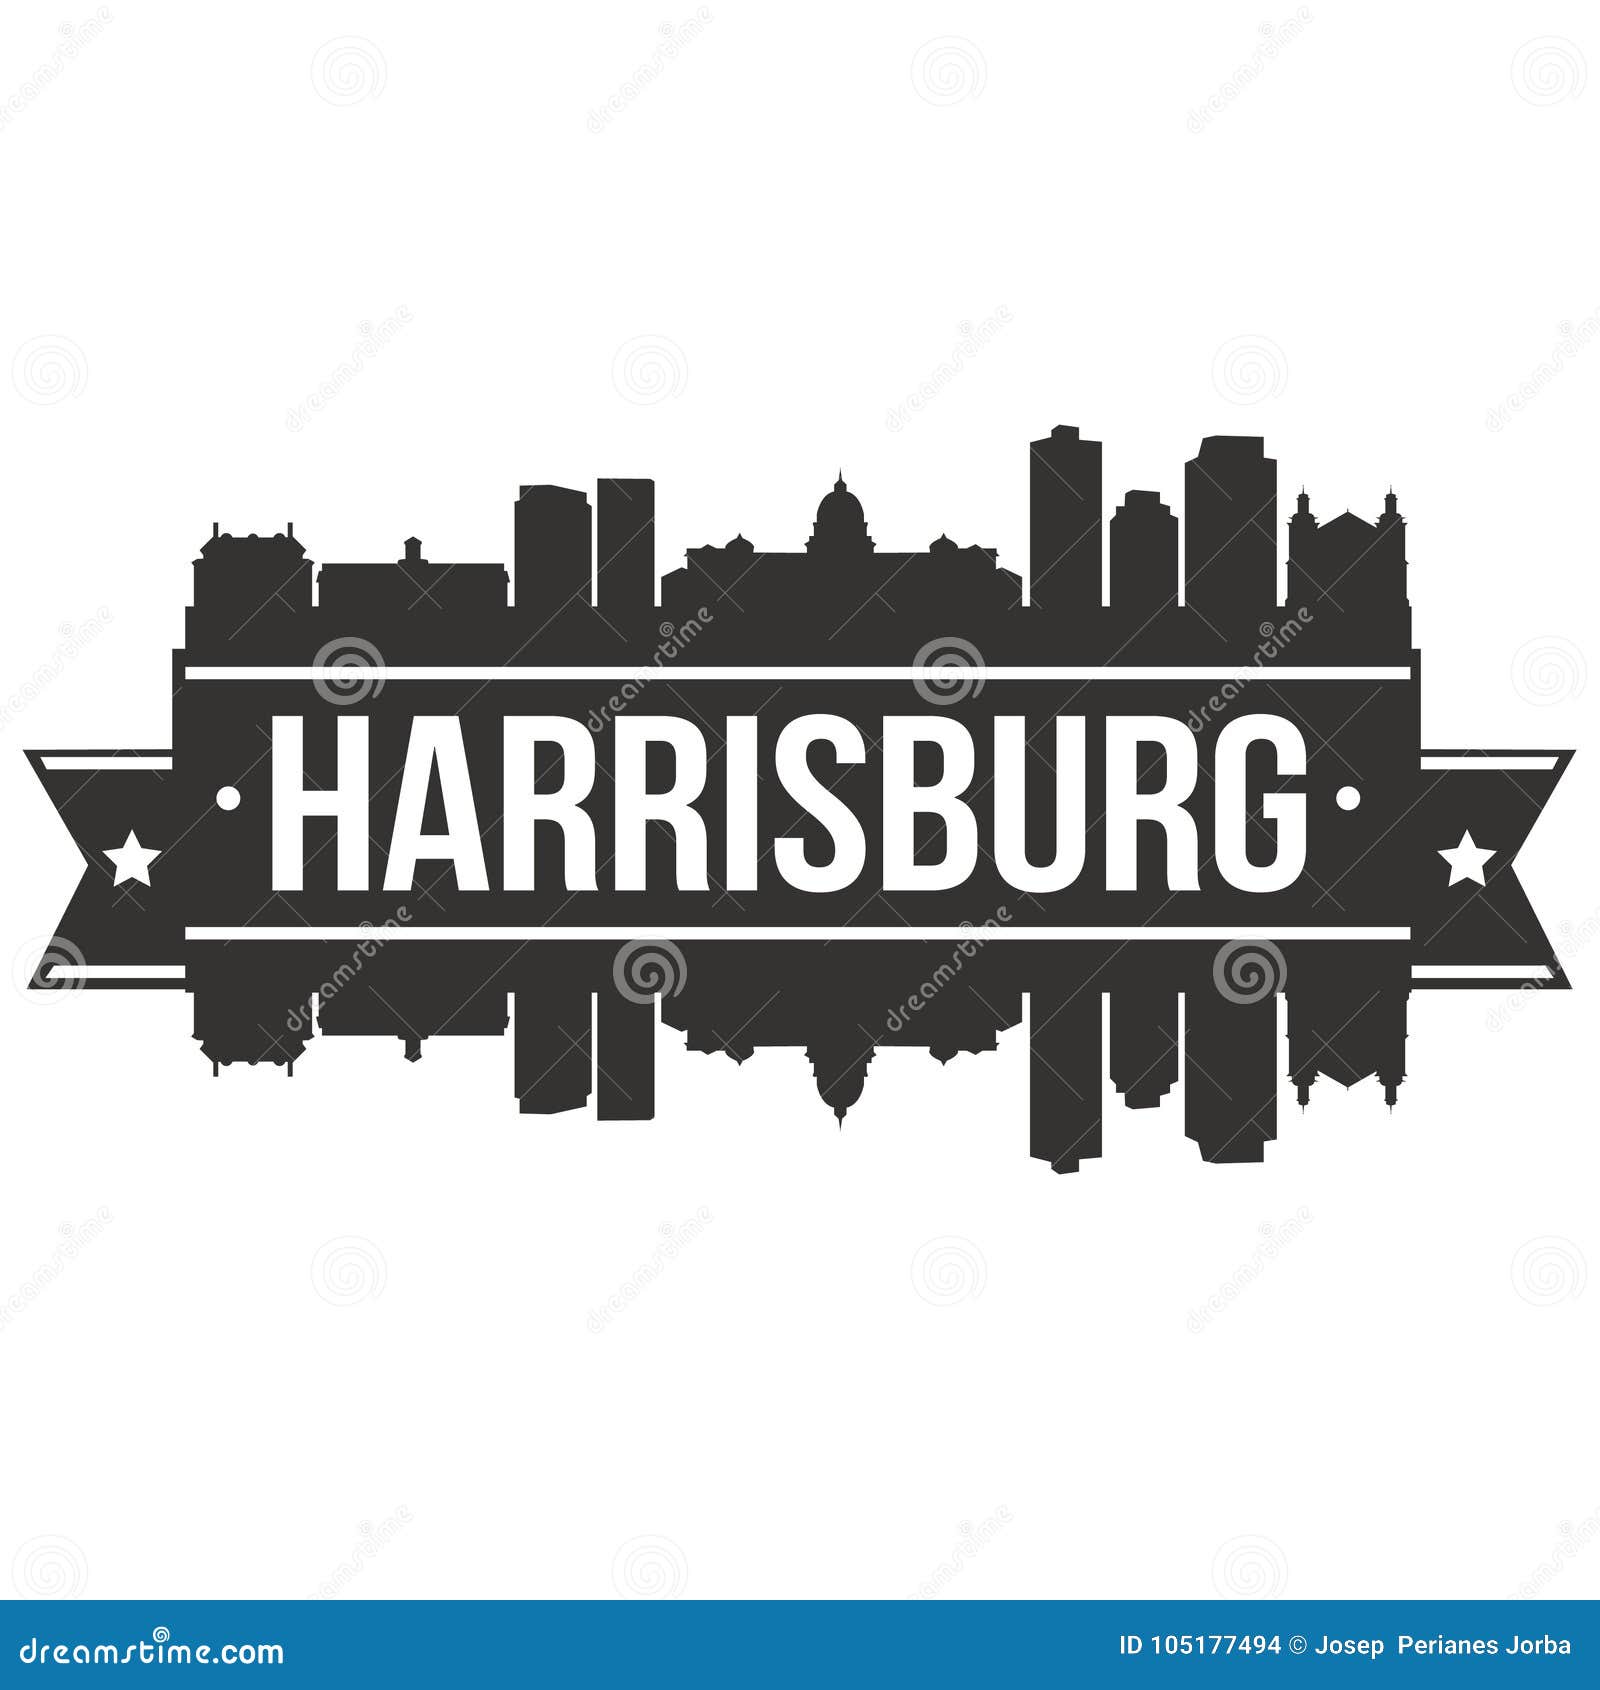 harrisburg pennysilvanya united states of america usa icon  art  skyline flat city silhouette editable template